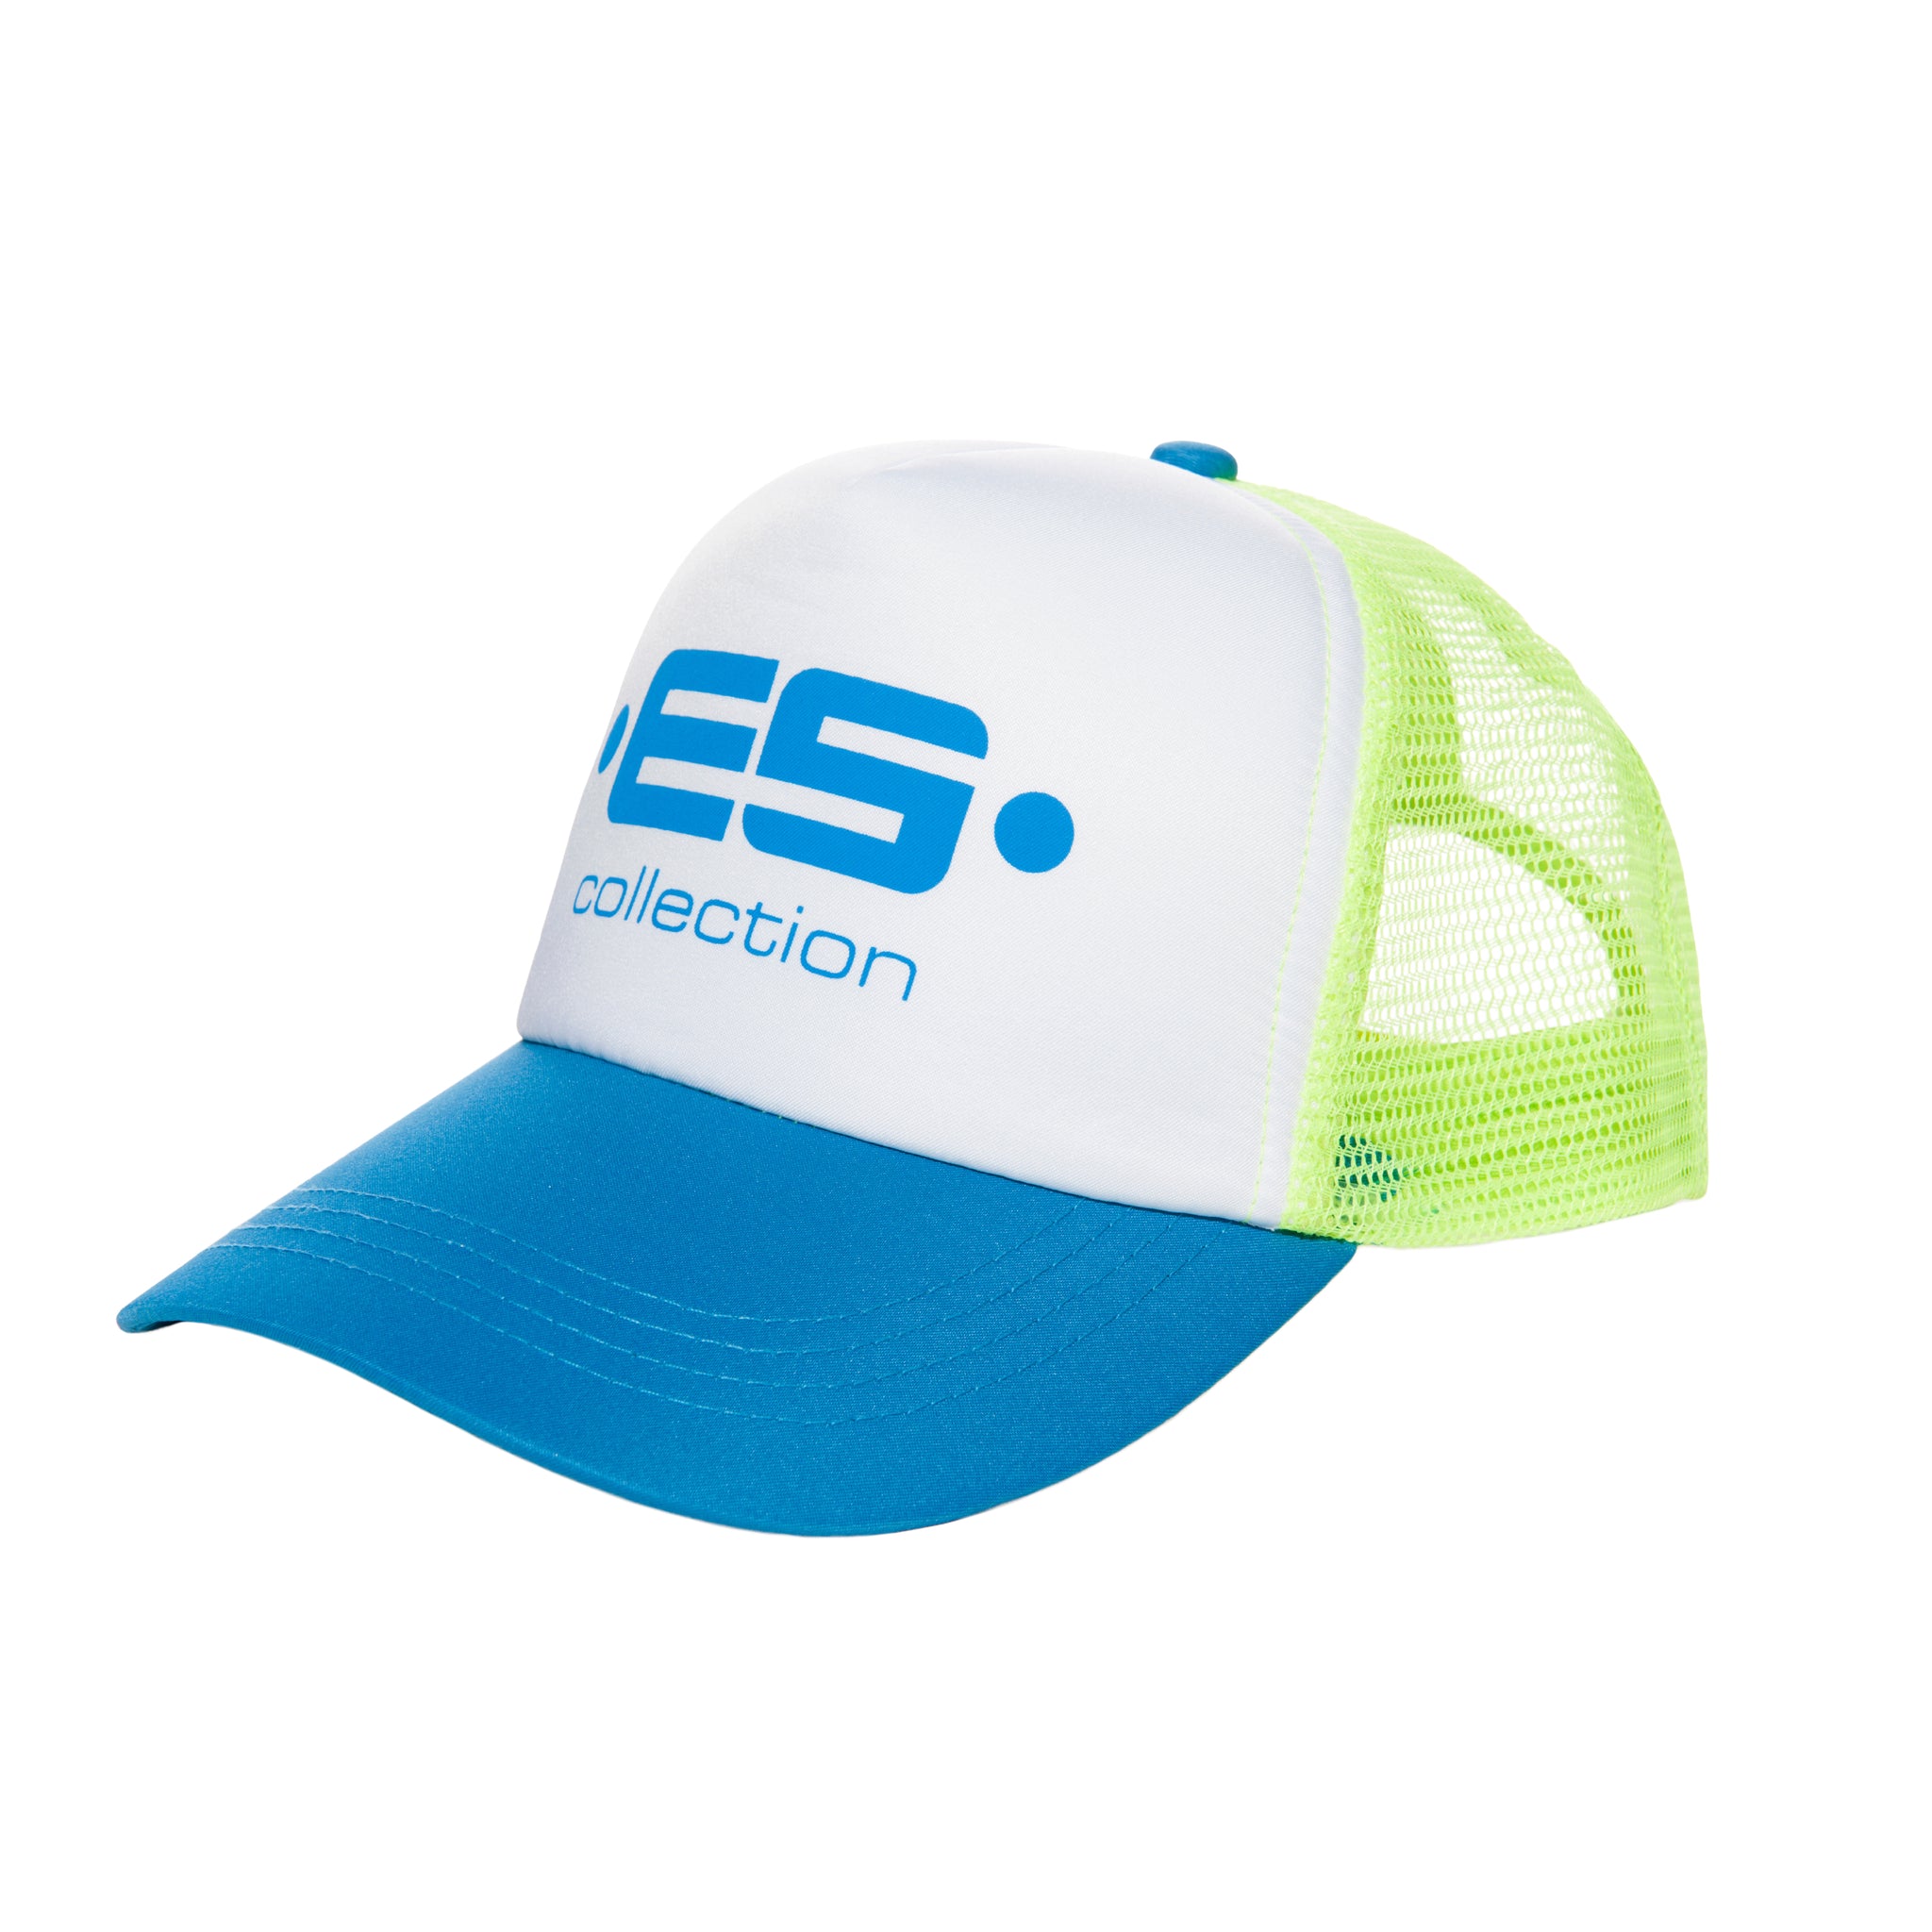 ES Collection Print Logo Baseball Cap Surf Blue CAP003